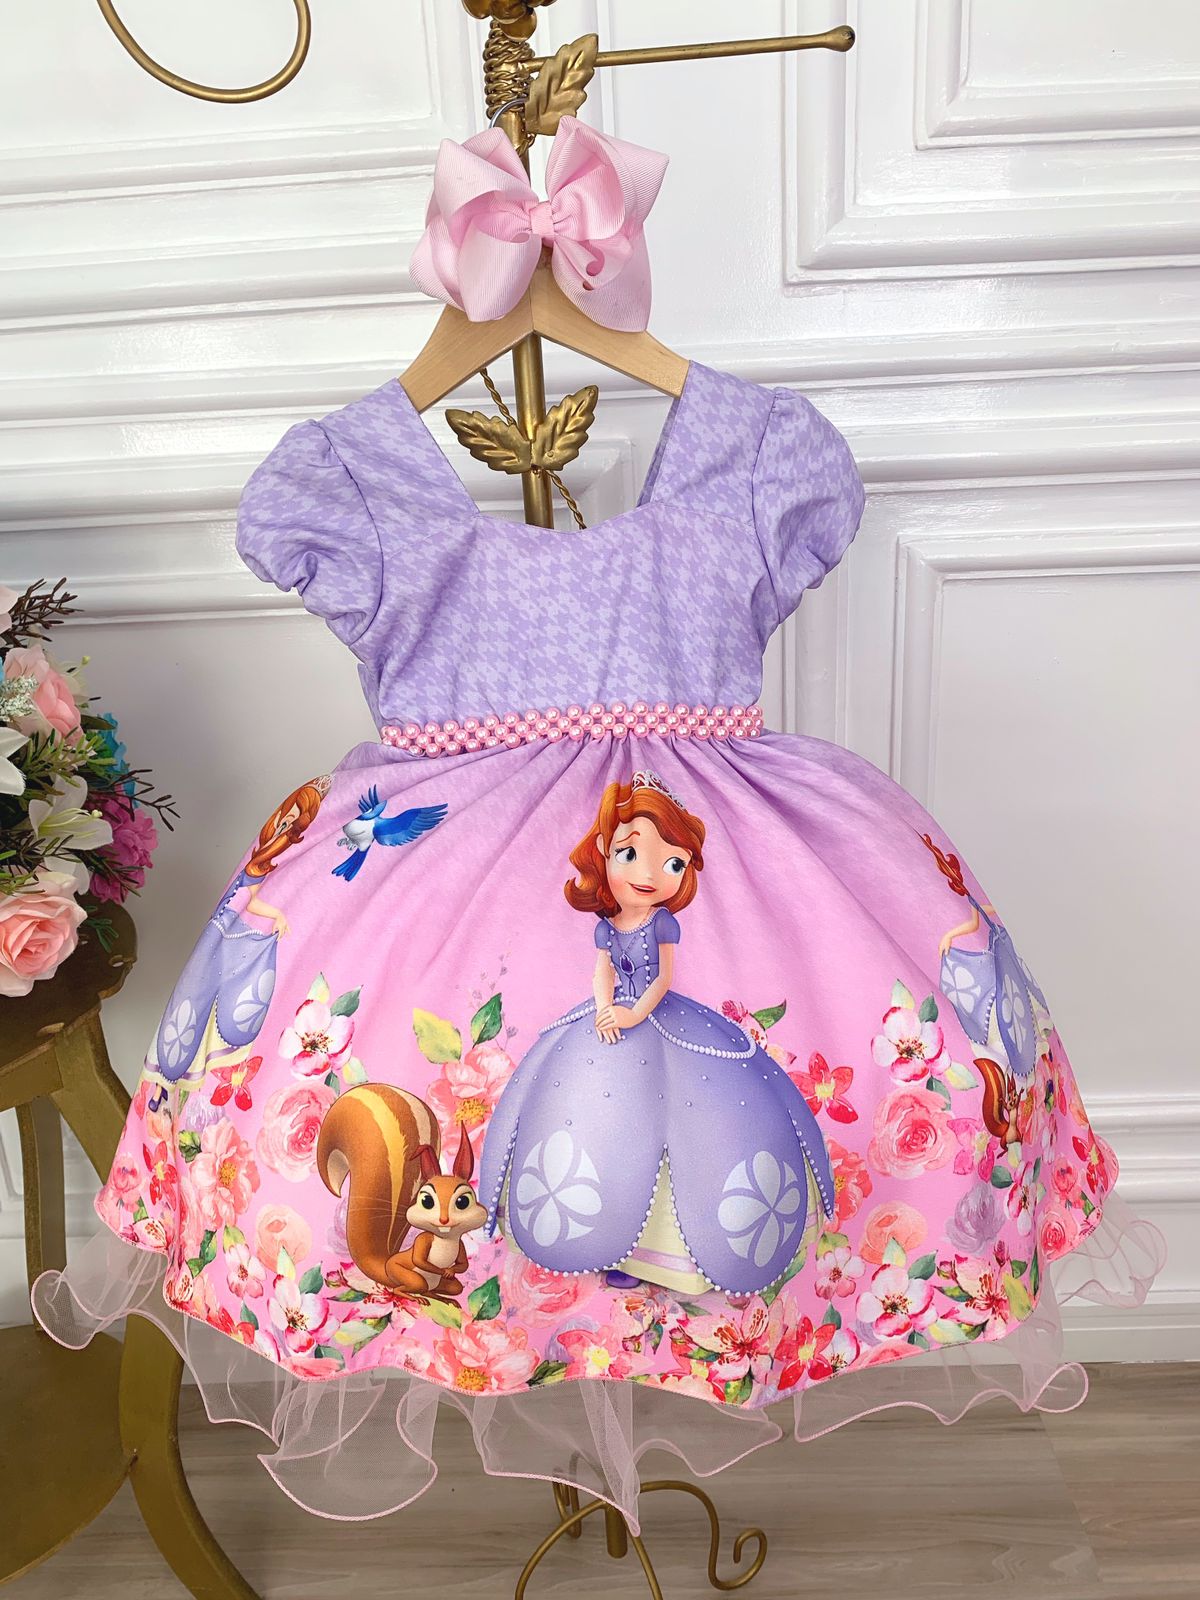 Vestido Infantil Princesa Sofia Lilás Cinto de Strass Luxo - Rosa Charmosa  Atacado